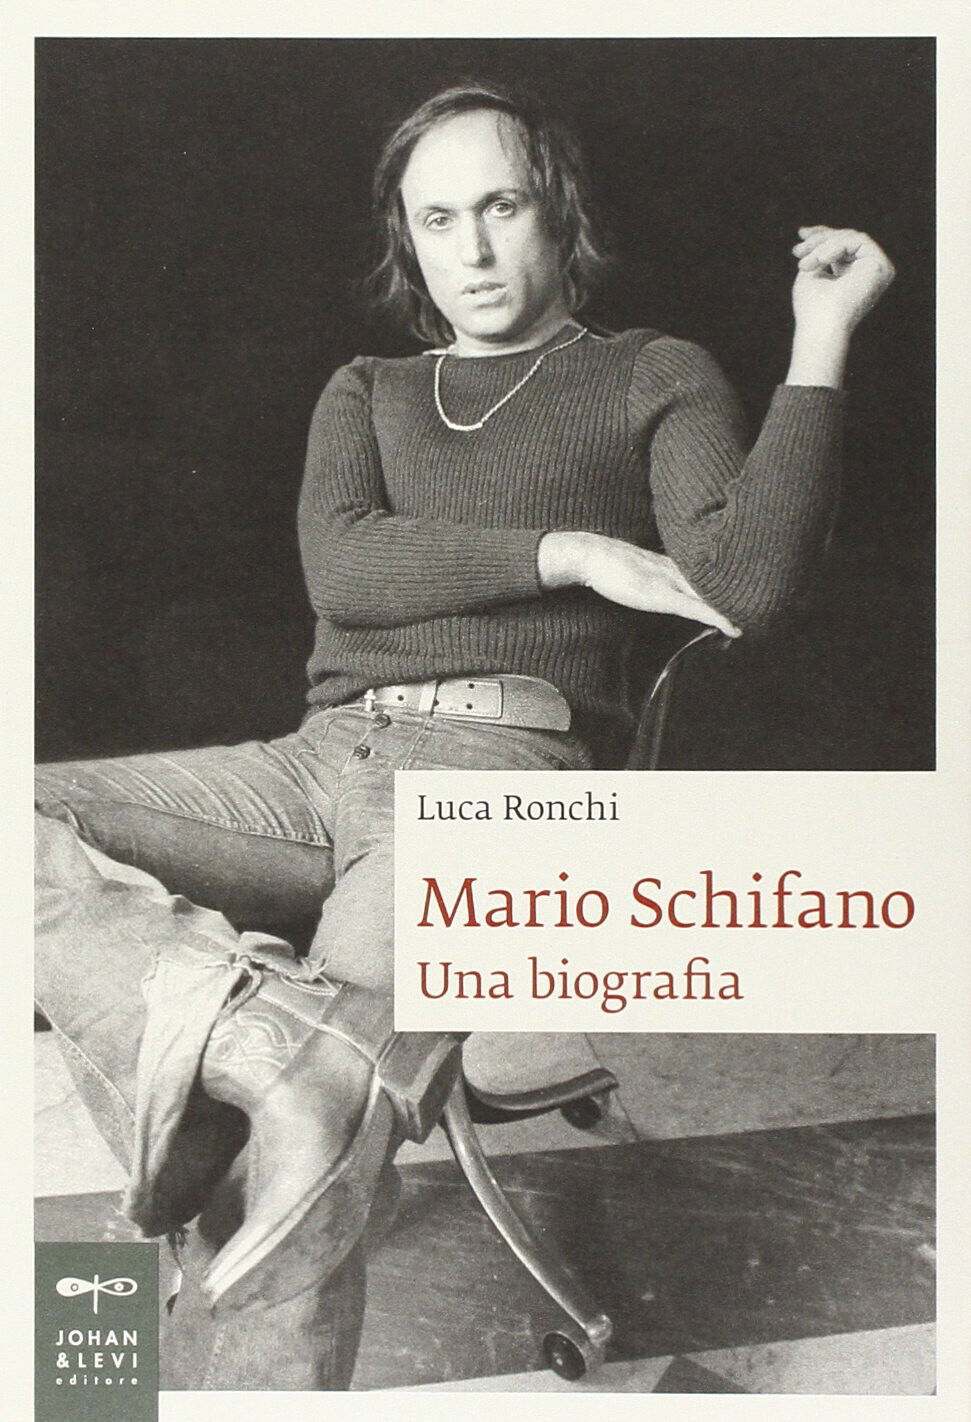 Mario Schifano. Una biografia - Luca Ronchi - Johan & Levi, 2012